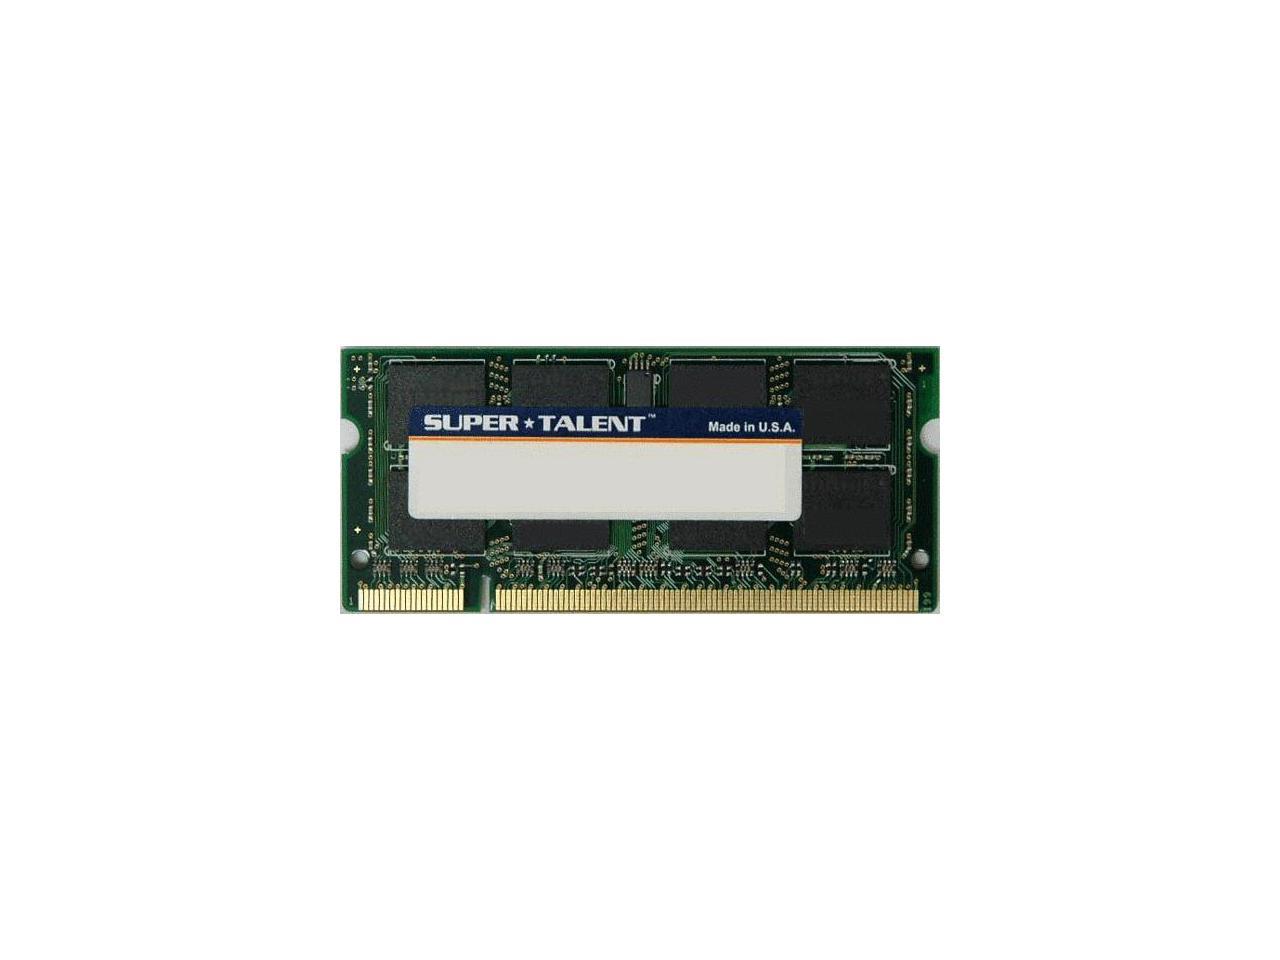 Super Talent Ddr2-800 Sodimm 1Gb/128X8 Micron Chip Notebook Memory